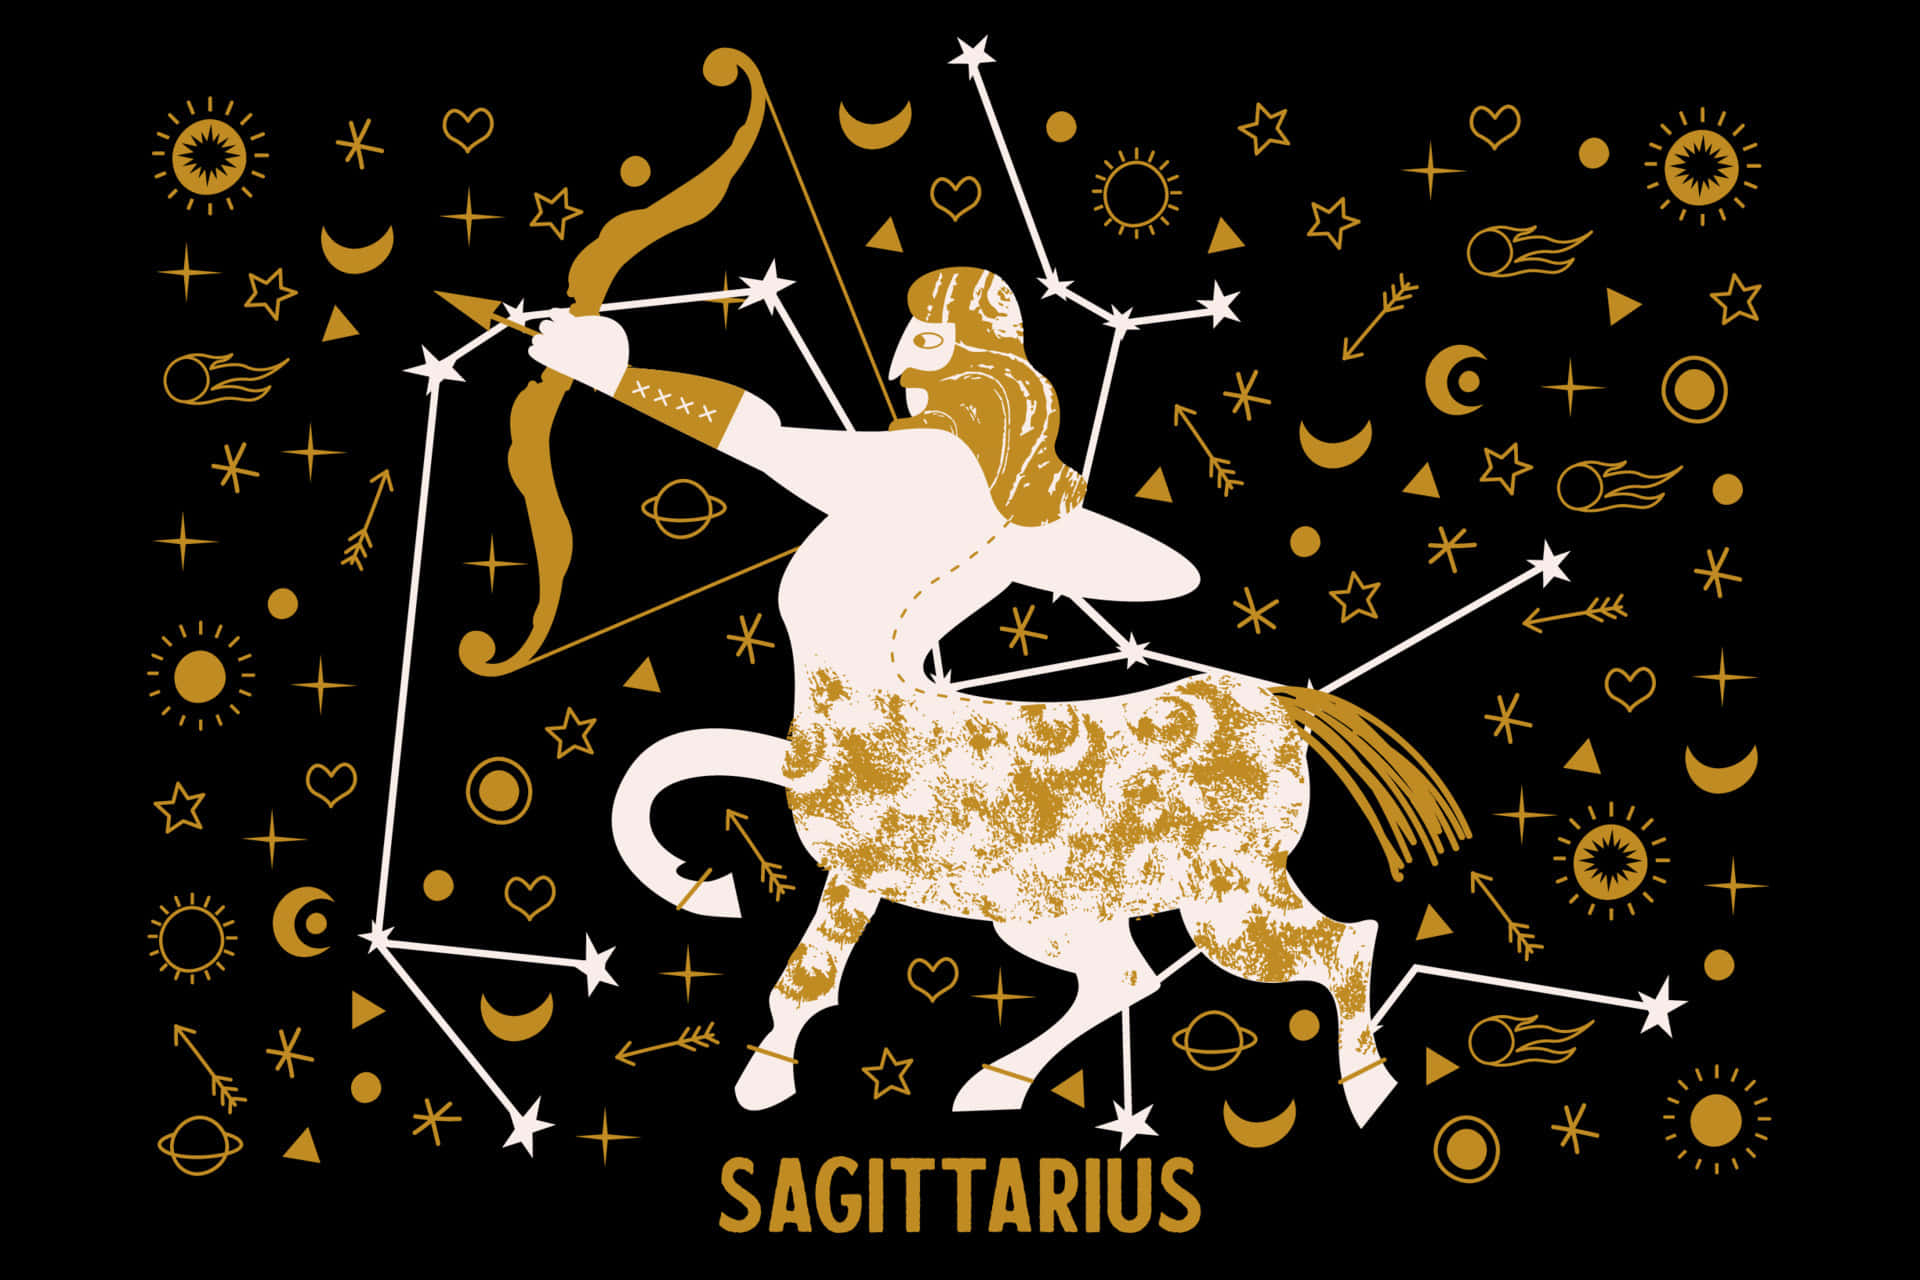 Sagittarius1920 X 1280 Baggrund.